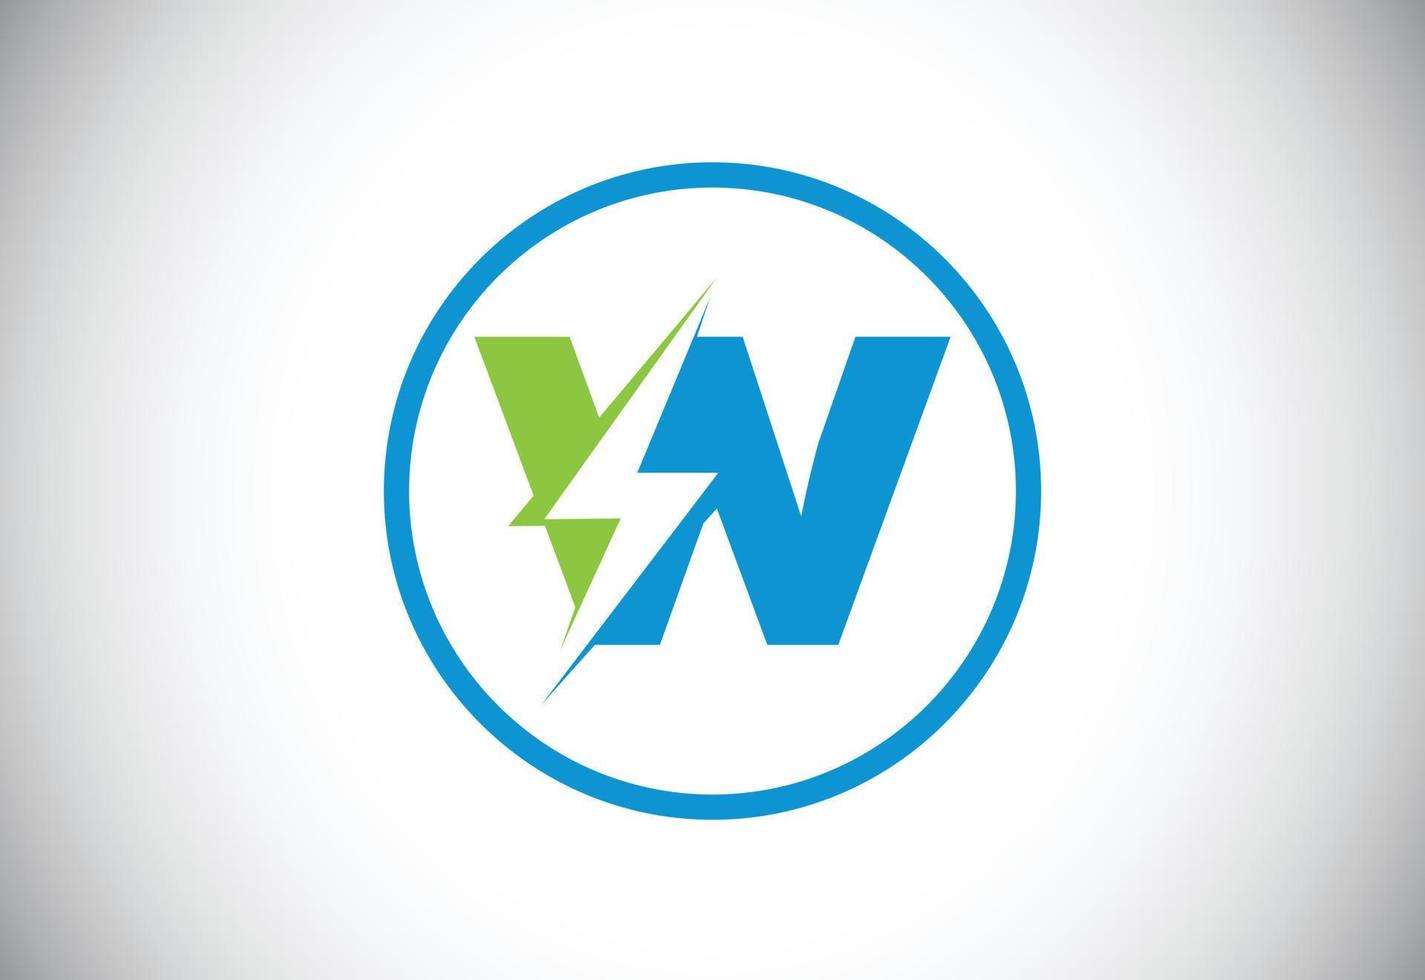 eerste w brief logo ontwerp met verlichting donder bout. elektrisch bout brief logo vector